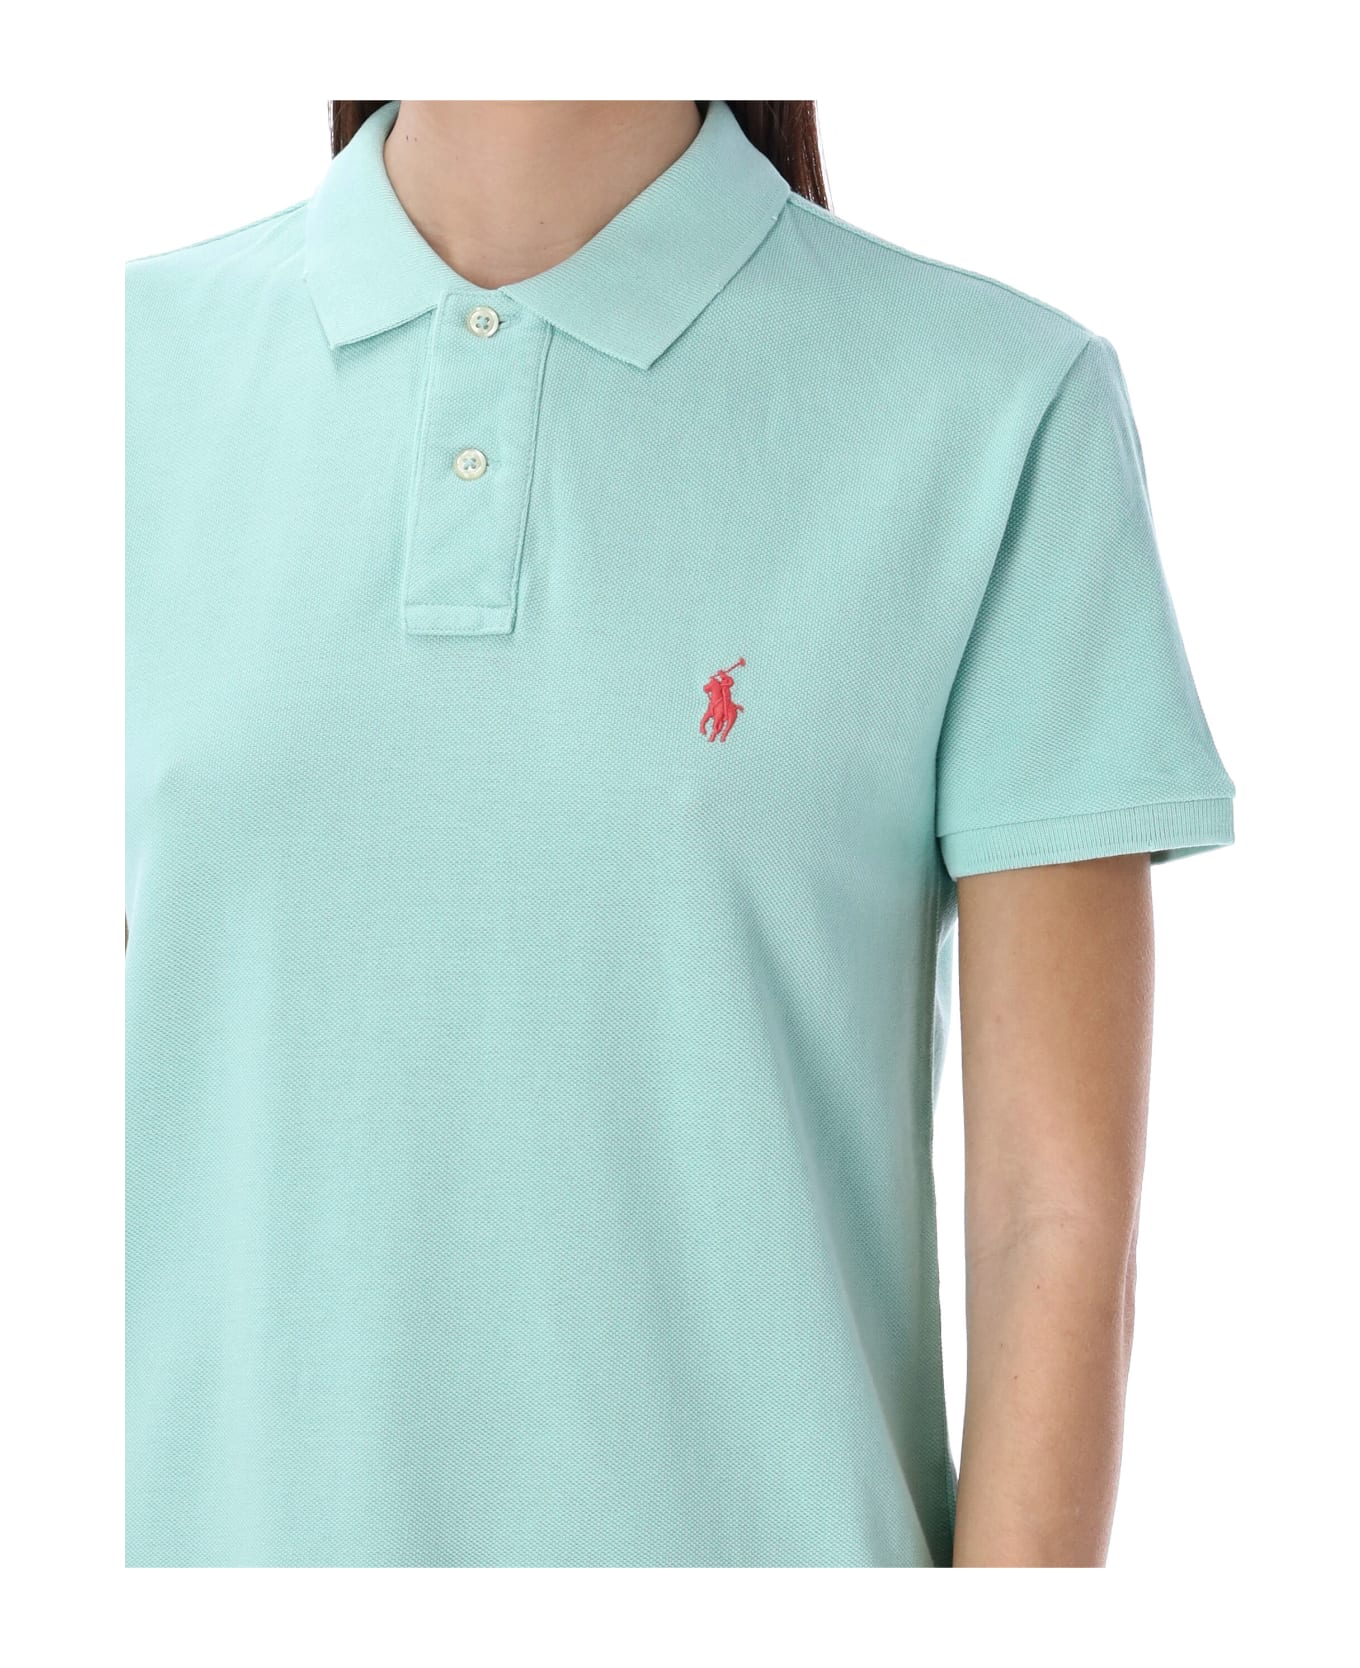 Polo Ralph Lauren Classic Fit Mesh Polo Shirt - BAYSIDE GREEN